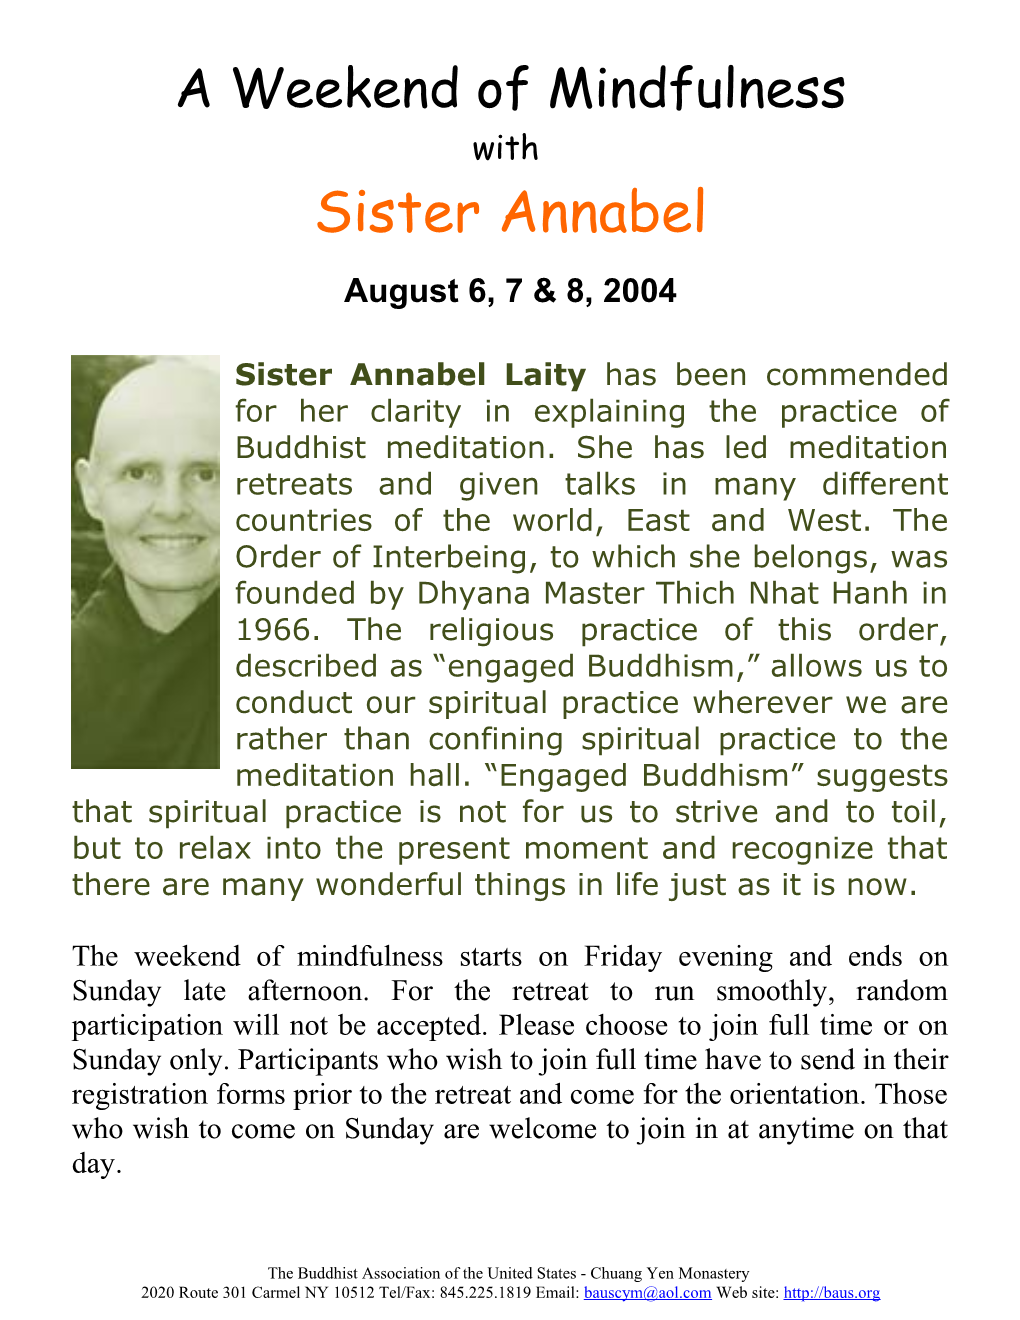 Sister Annabel Laity, Buddhist Nun